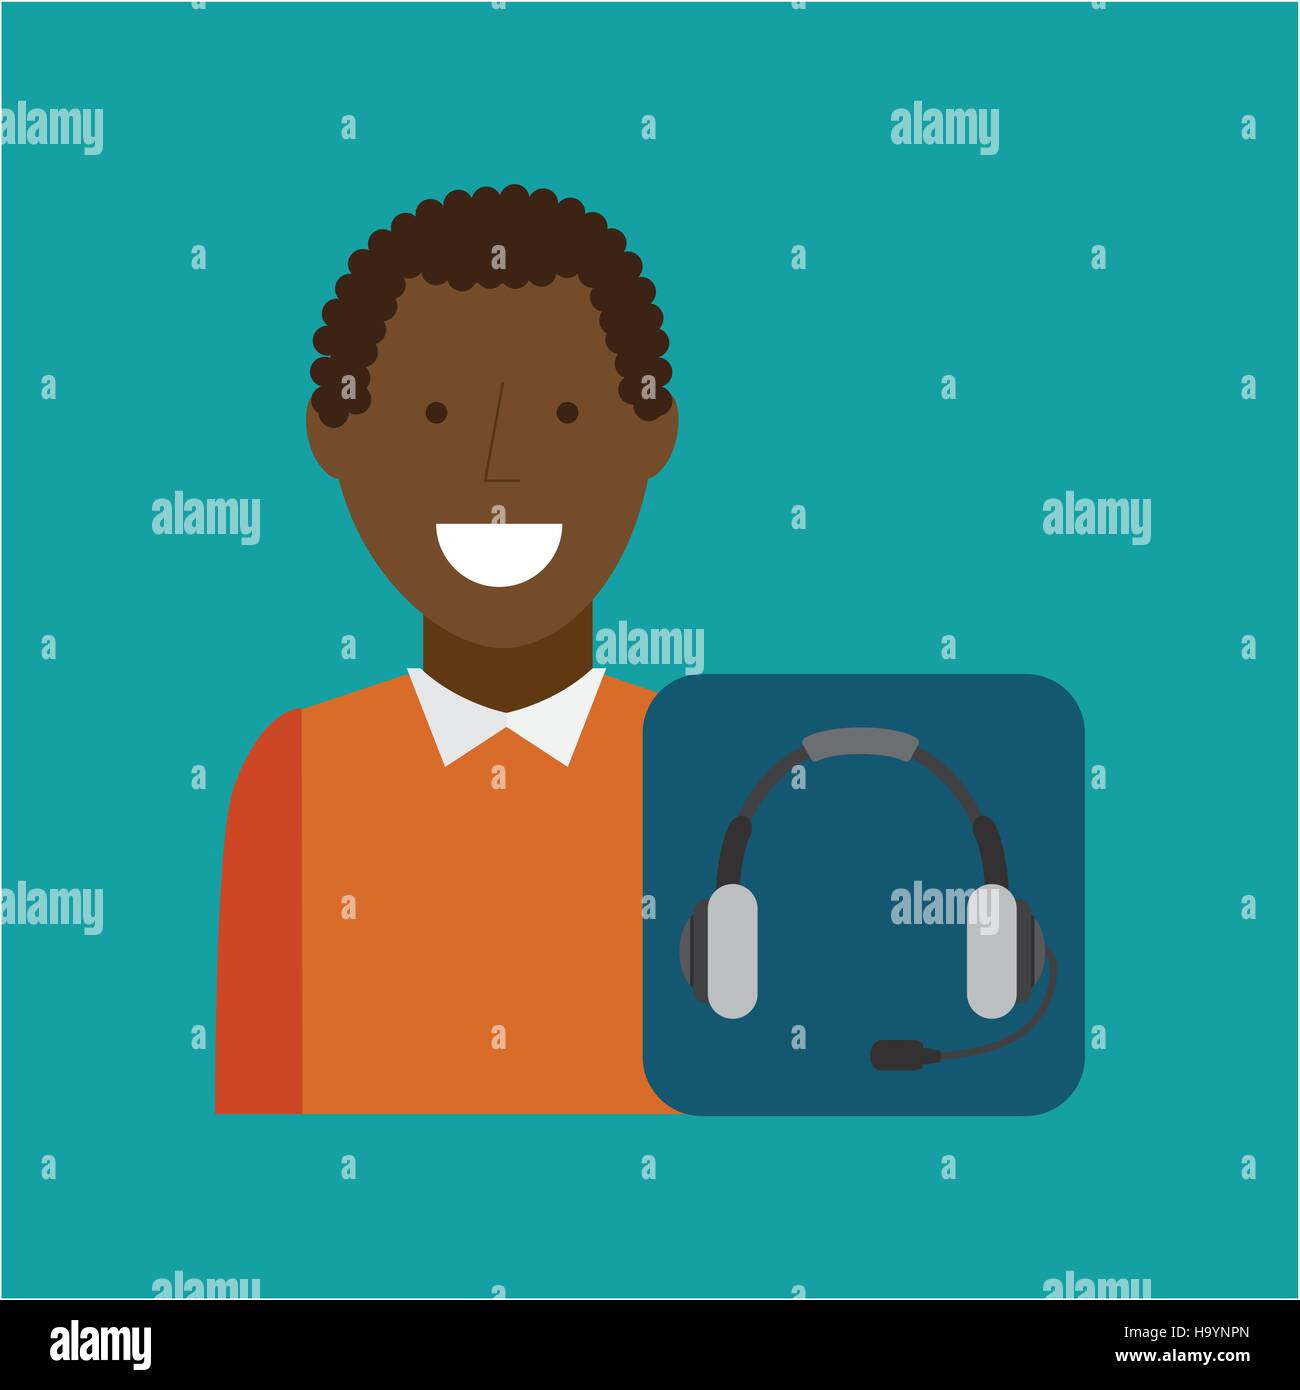 man afroamerican using laptop heatset media icon vector illustration eps 10 Stock Vector